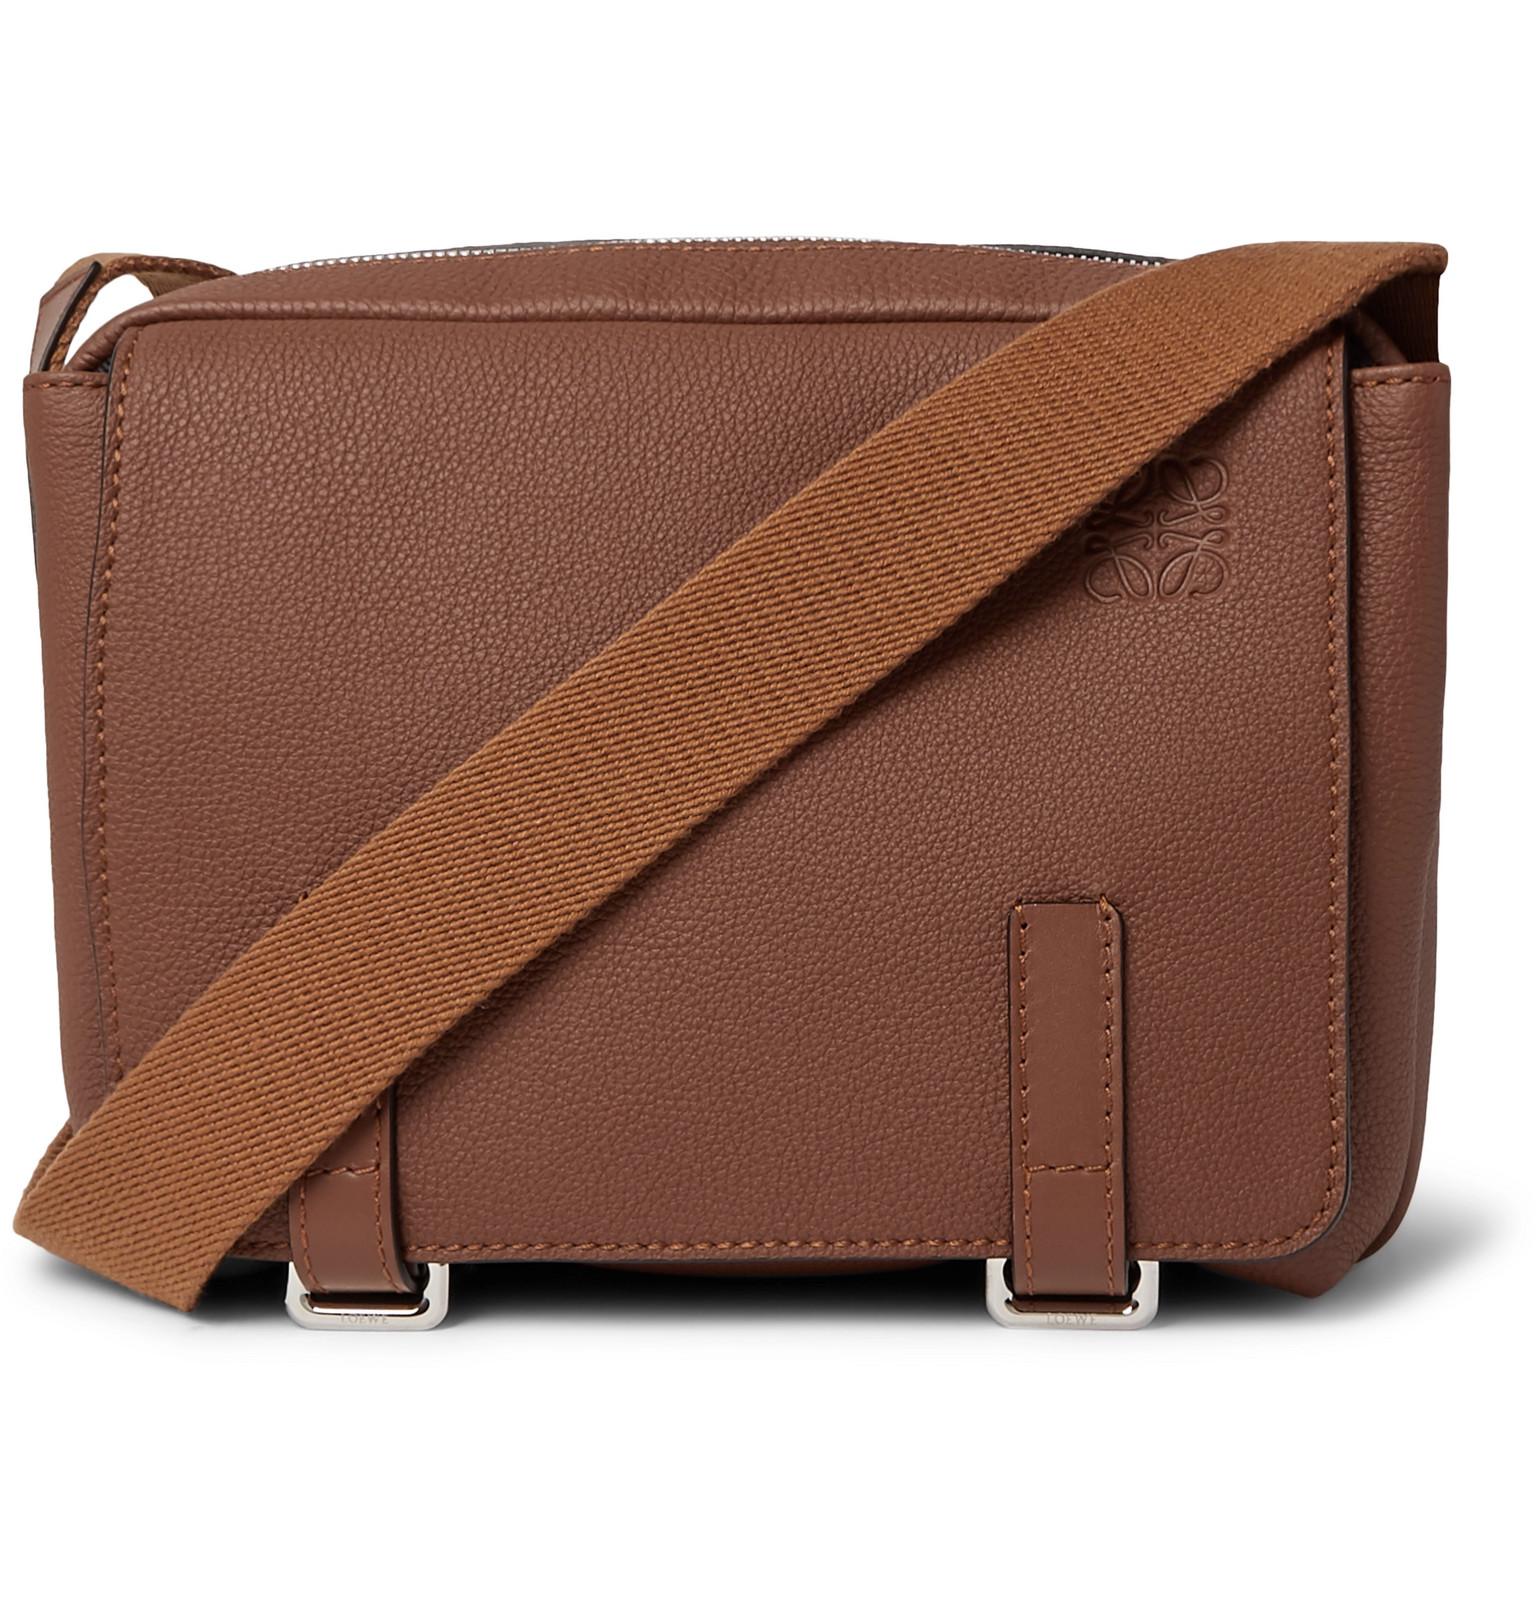 Loewe Military Full-grain Leather Messenger Bag in Brown for Men - Lyst